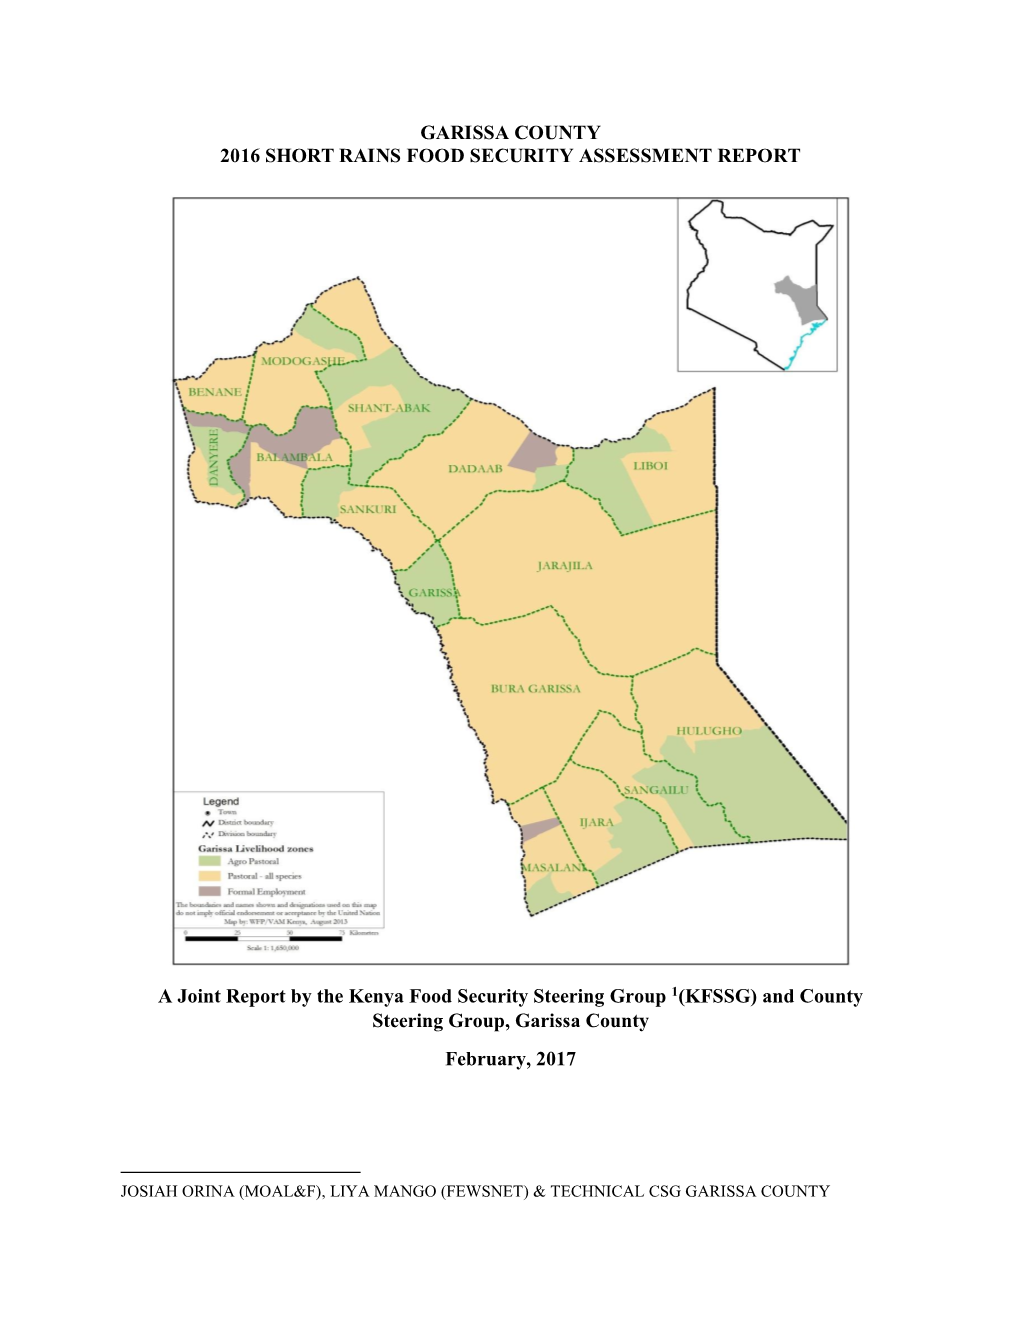 Garissa County 2016 Short Rains Food Security Assessment Report